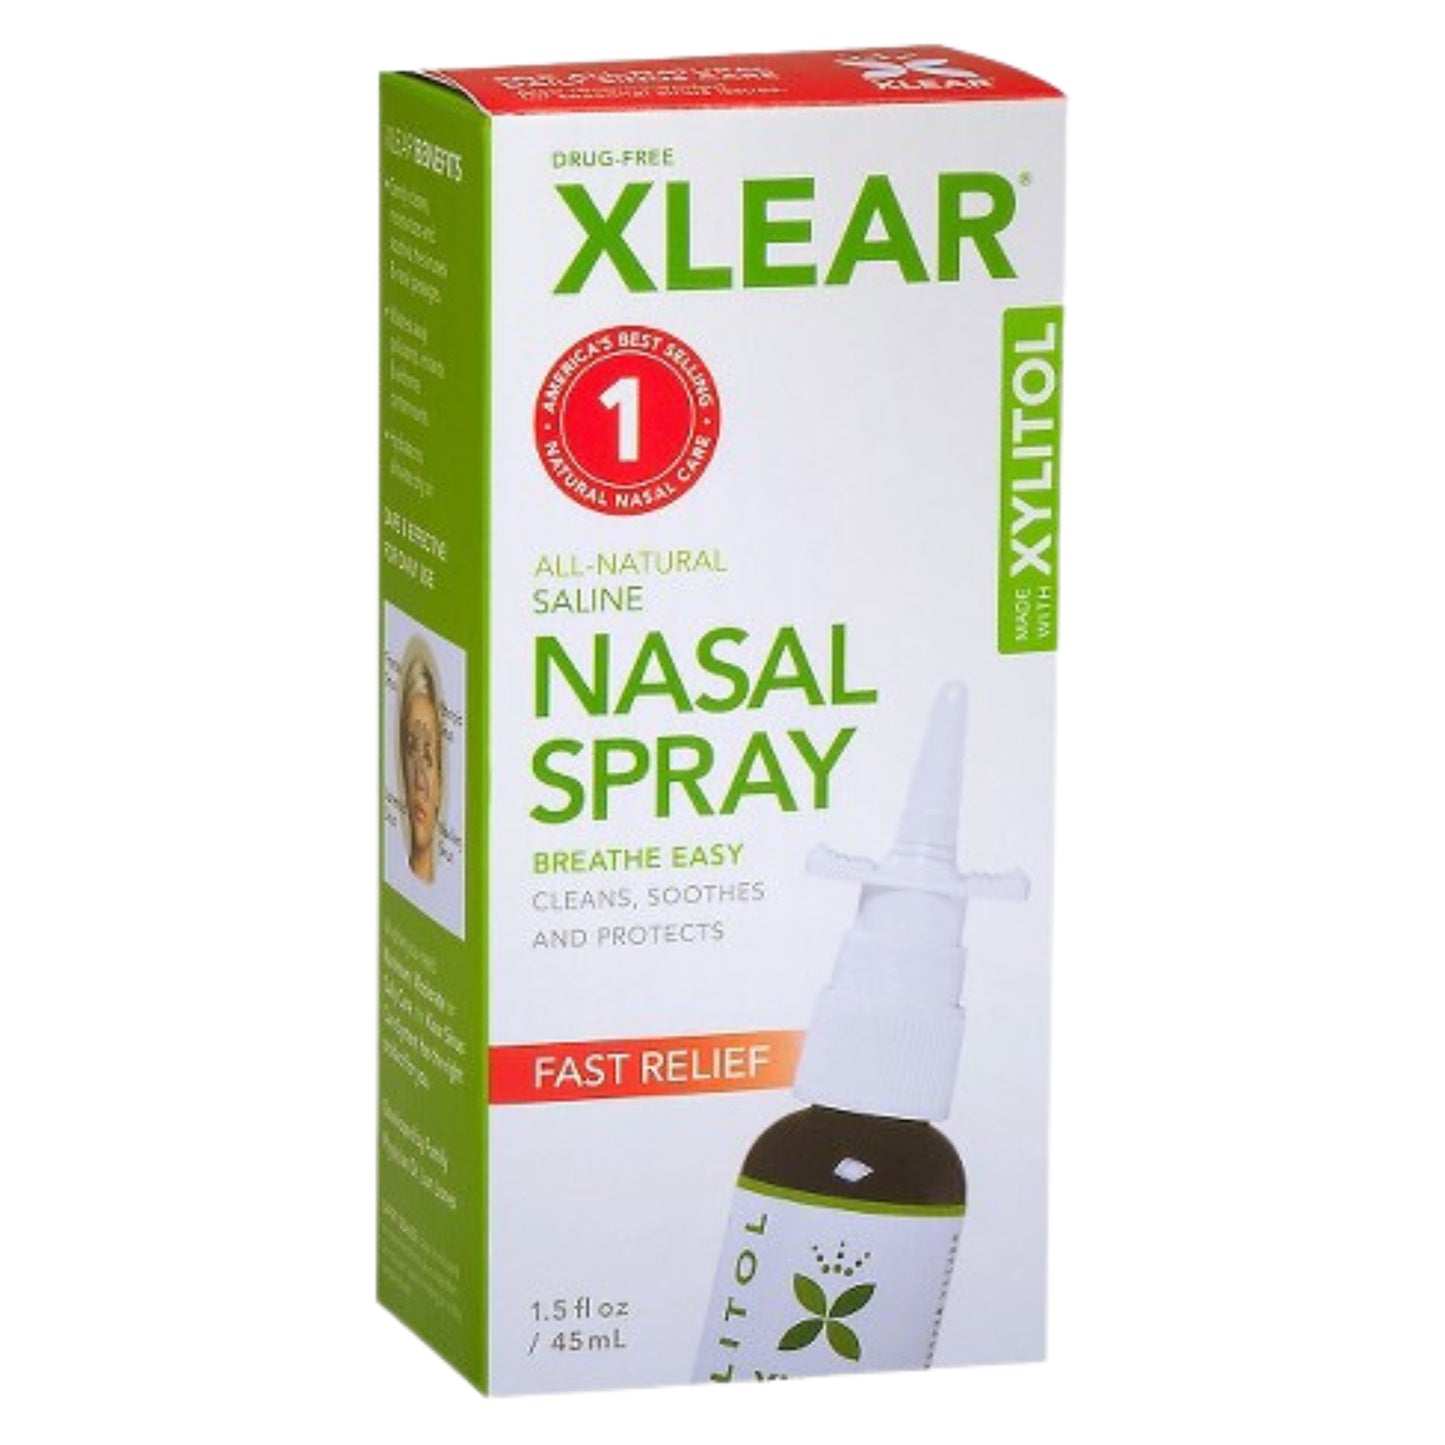 XLear Nasal Spray - 1.5 oz